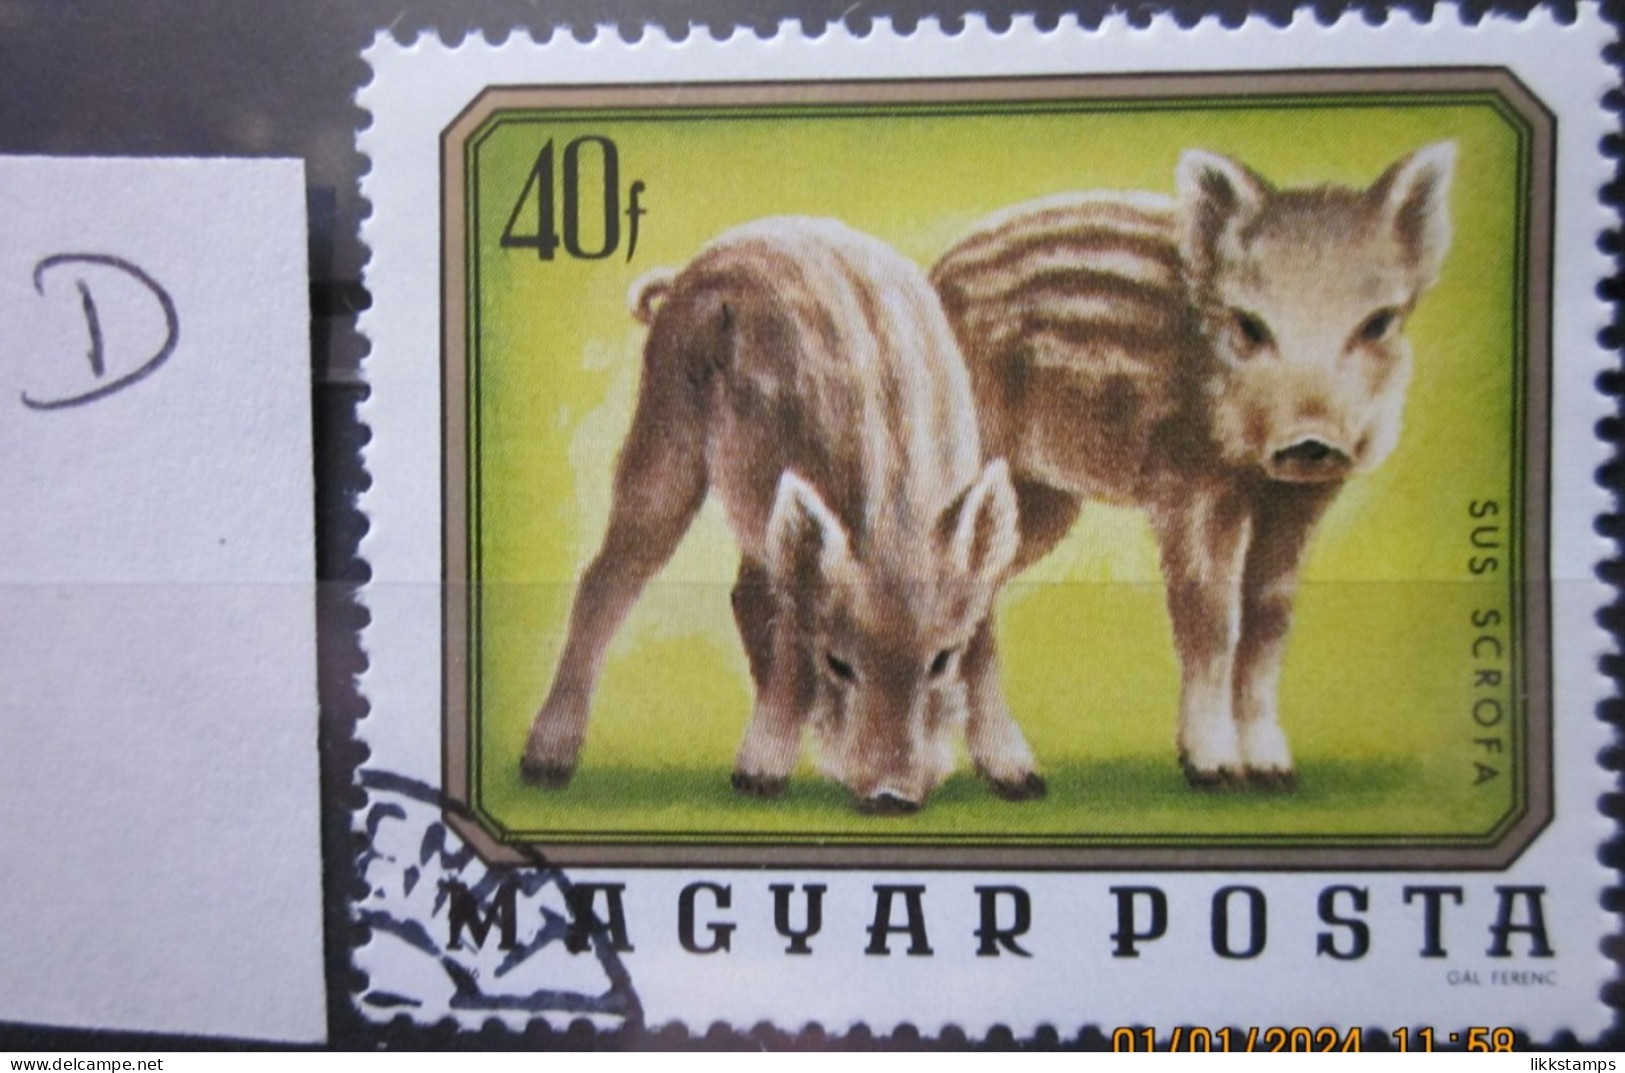 HUNGARY ~ 1976 ~ S.G. NUMBER 3014, ~ 'LOT D' ~ YOUNG ANIMALS. ~ VFU #02978 - Usado